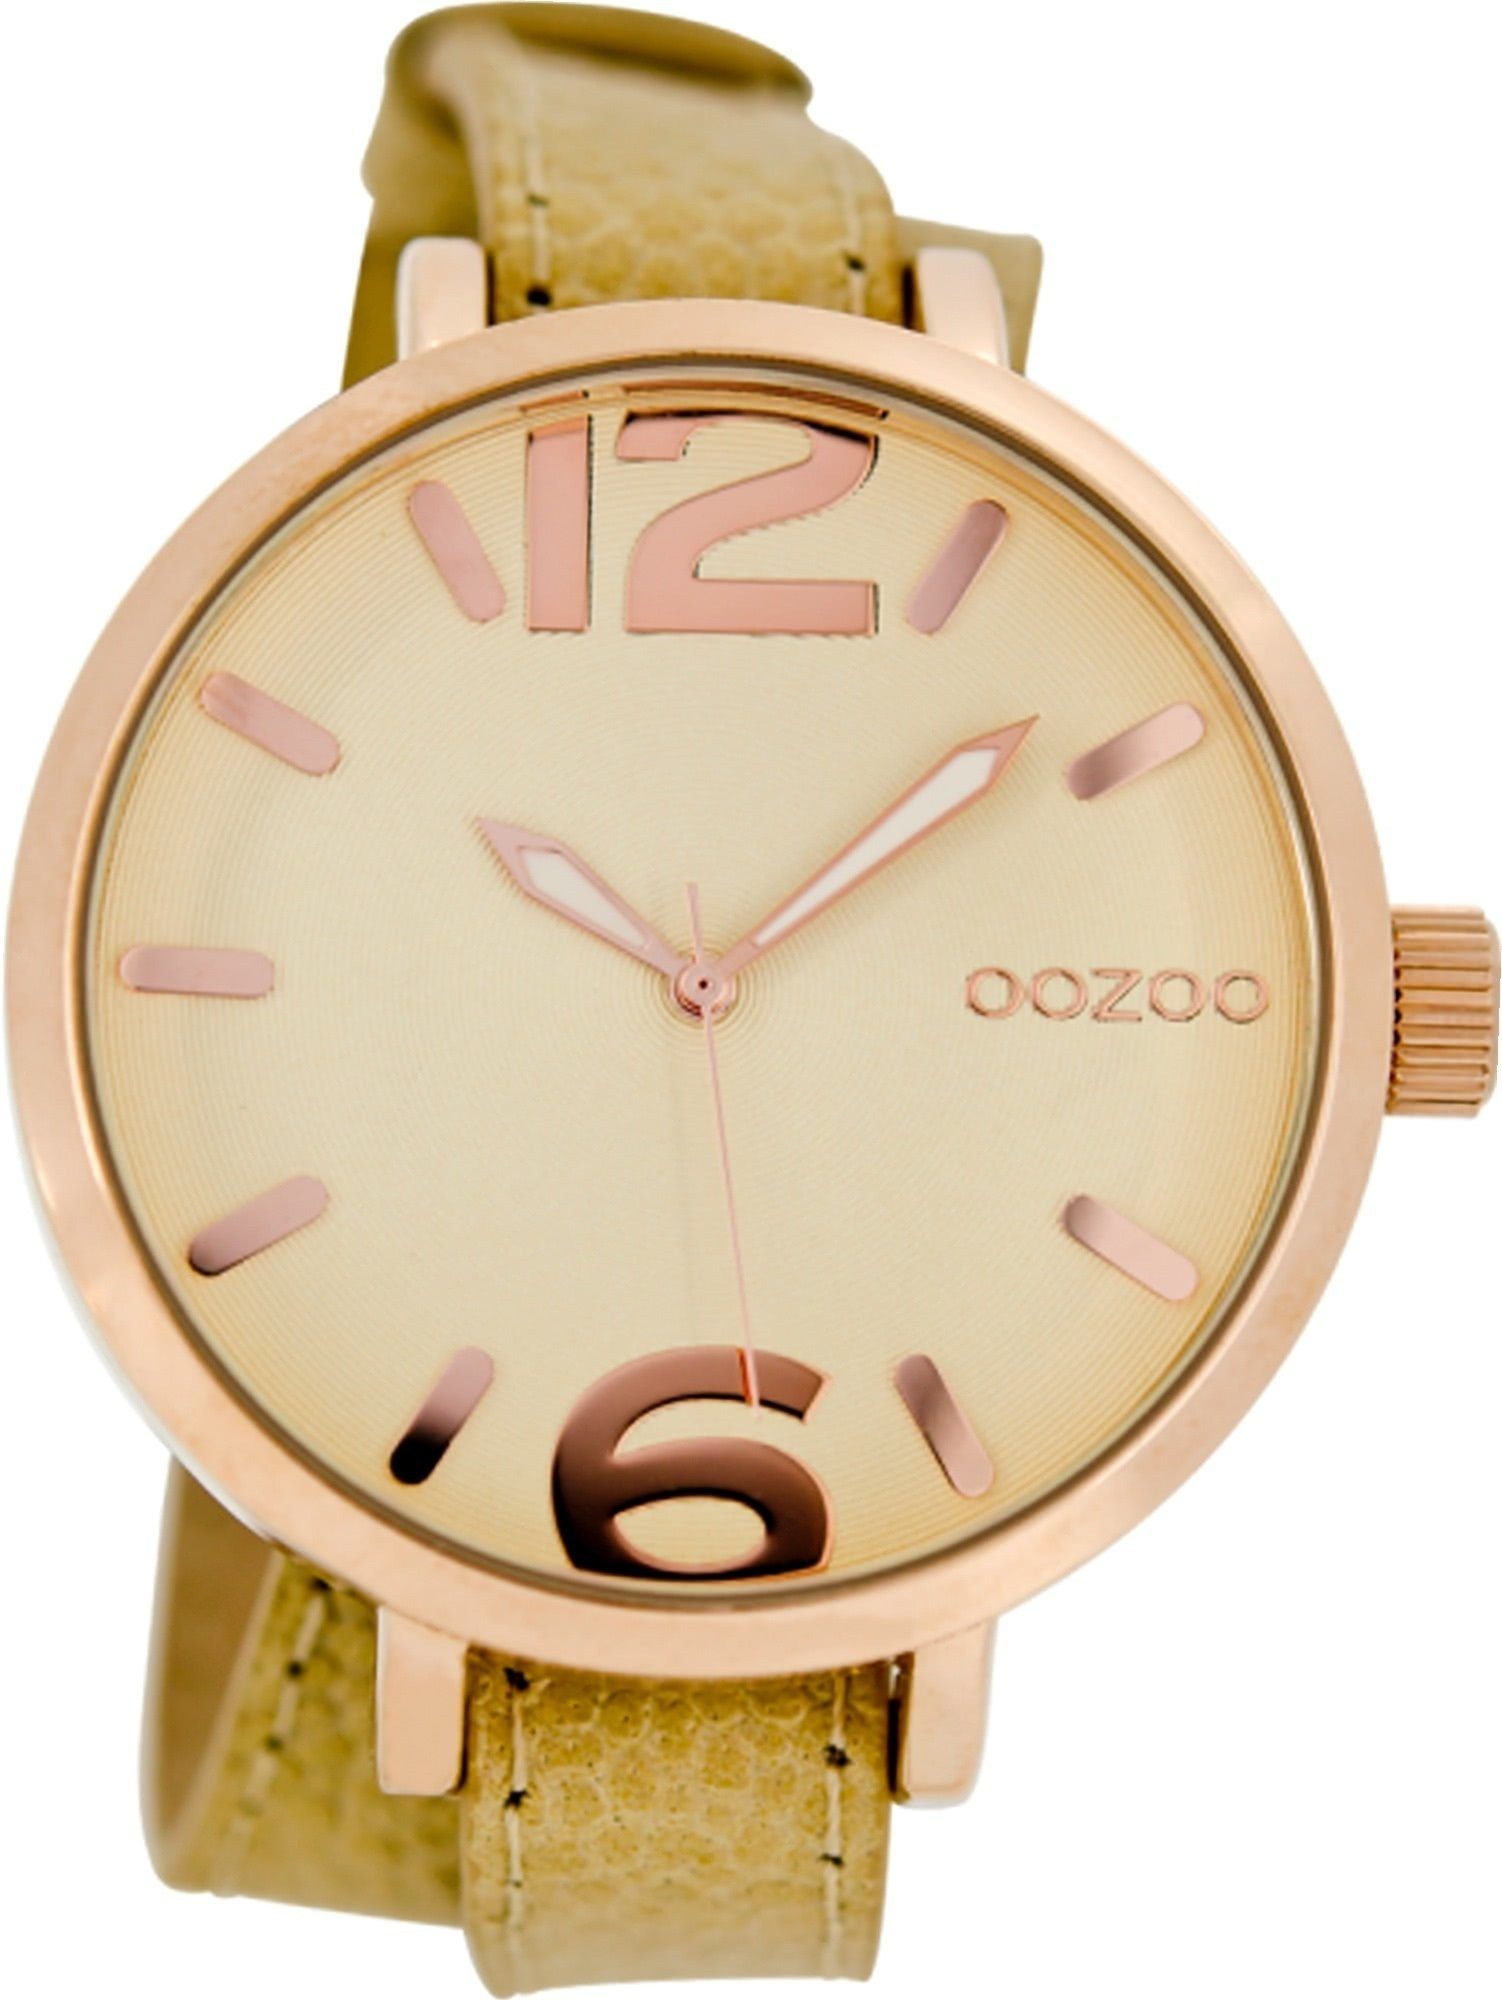 Damen Damenuhr beige, Oozoo Quarz-Uhr Quarzuhr braun, groß Gehäuse, OOZOO Timepieces, 45mm) (ca. Lederarmband rundes rose